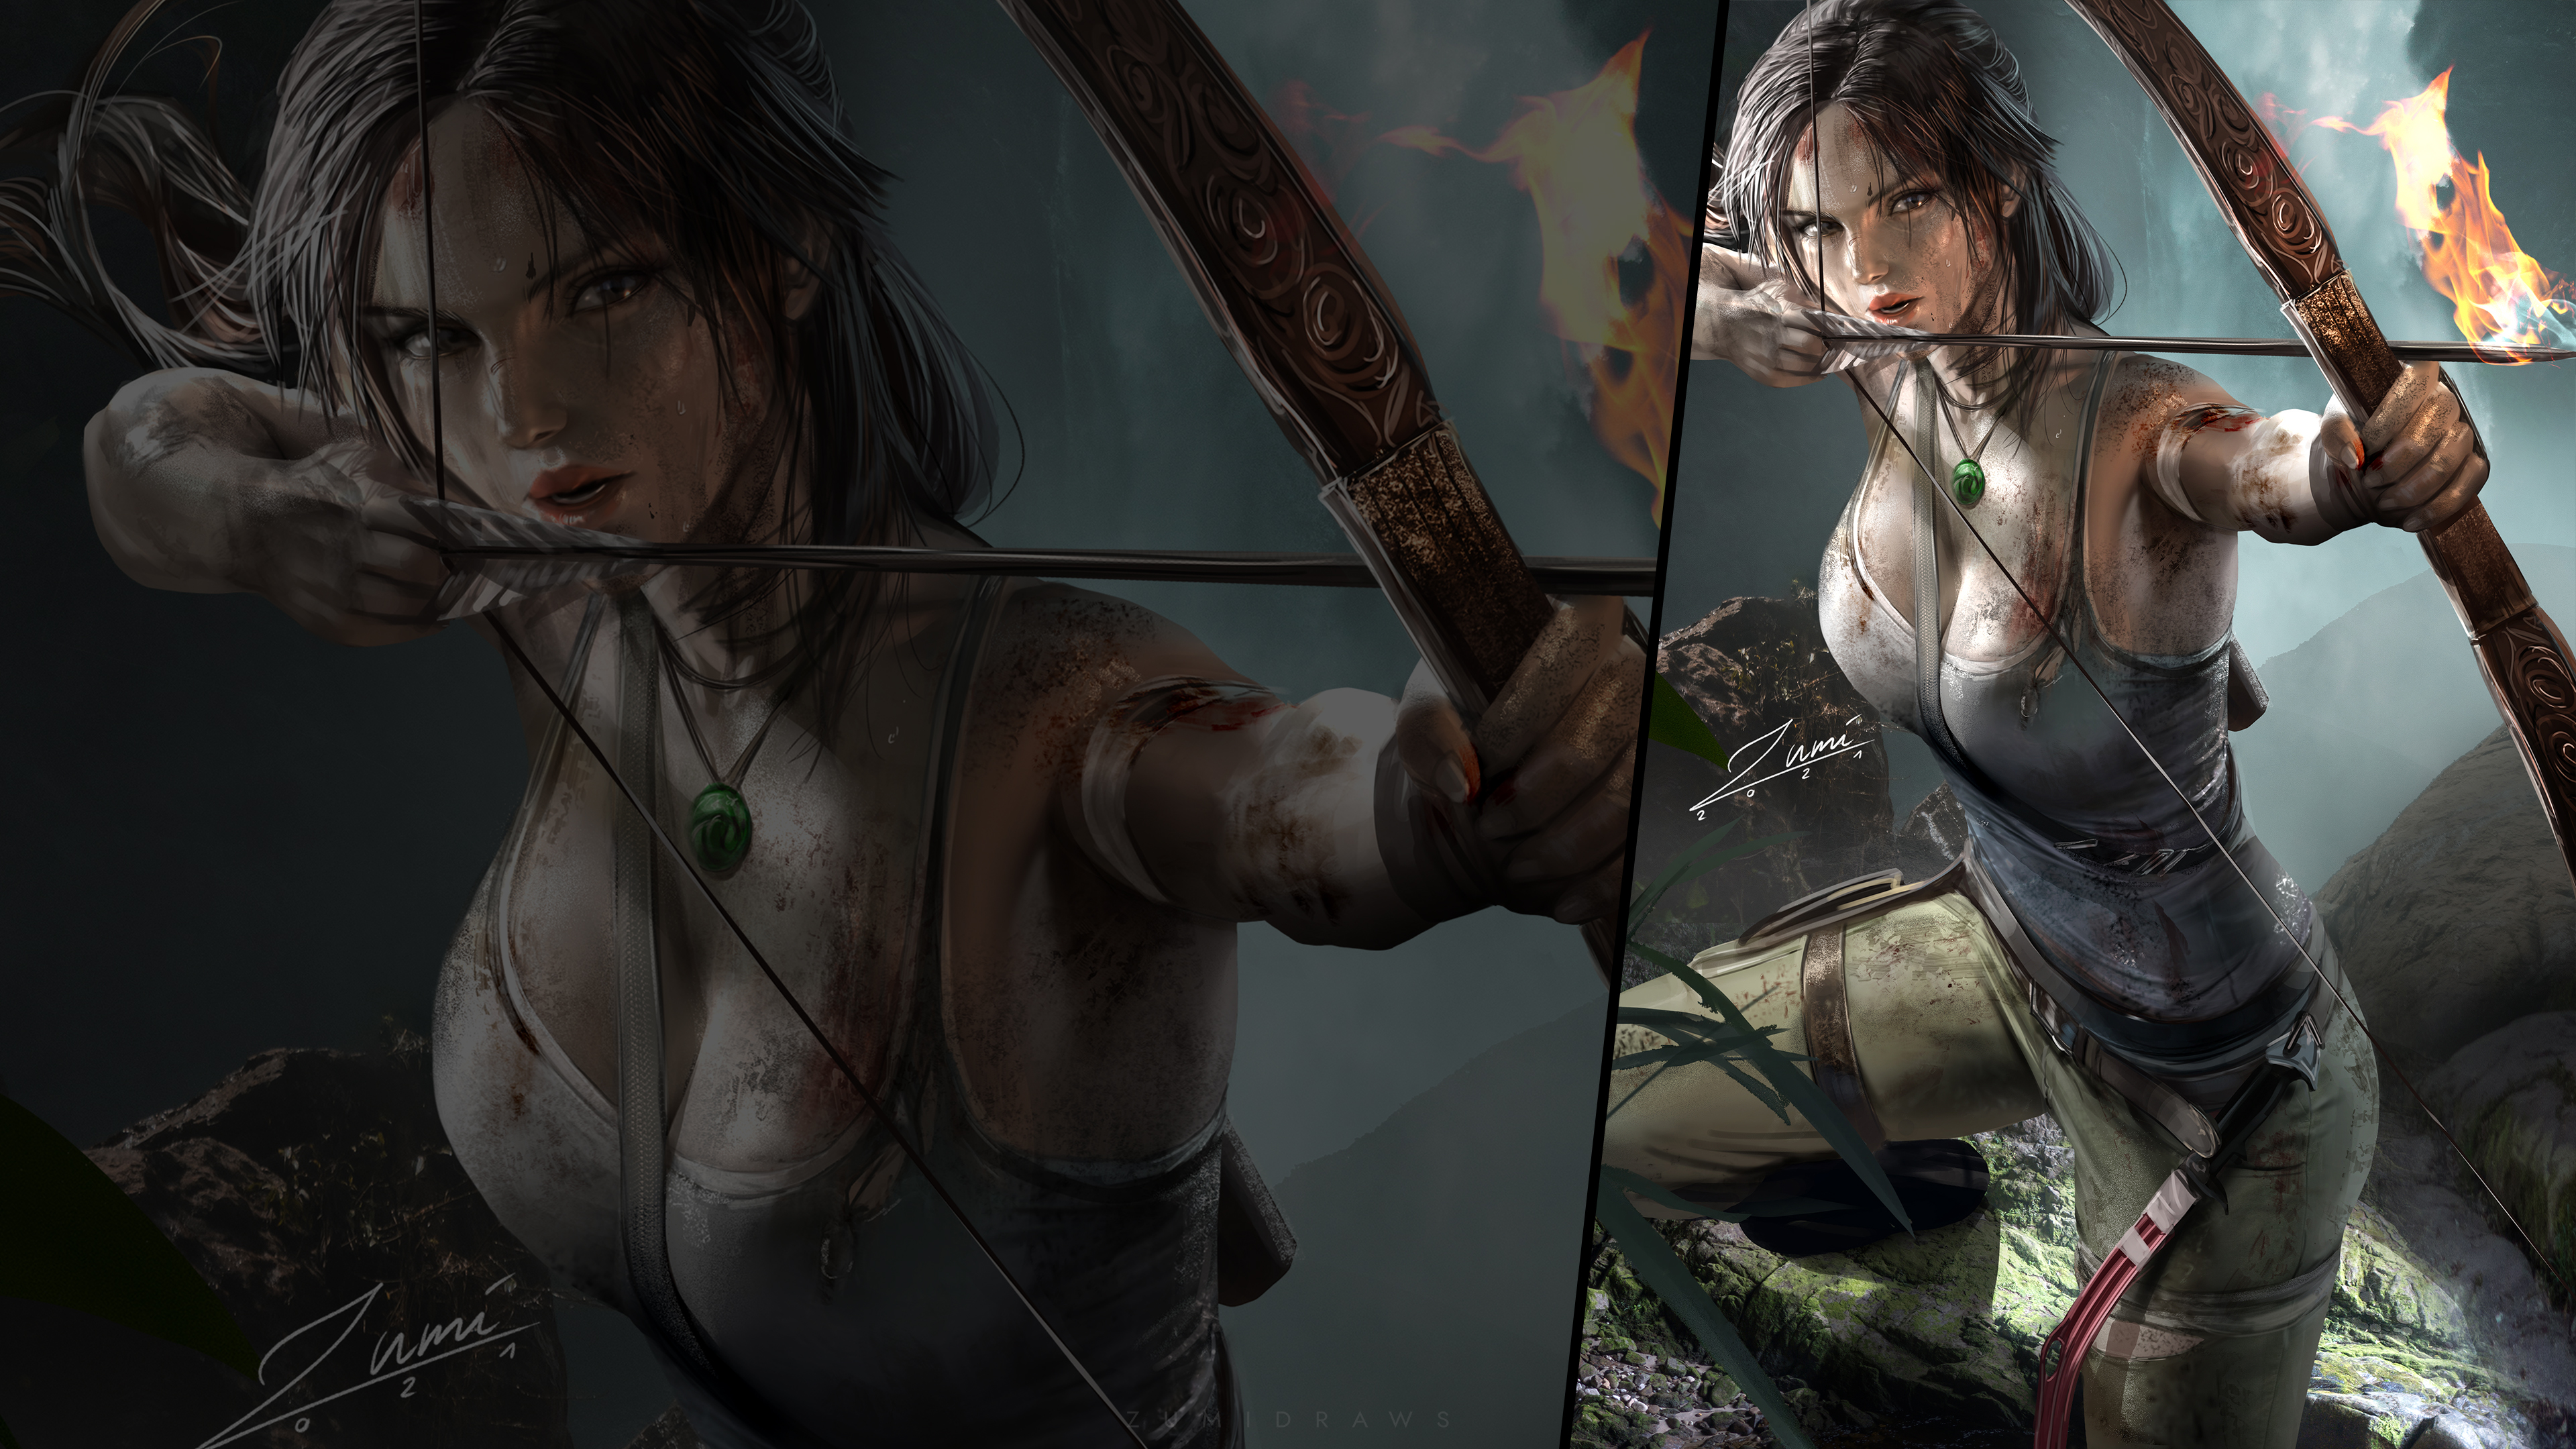 Tomb Raider 1 Wallpapers